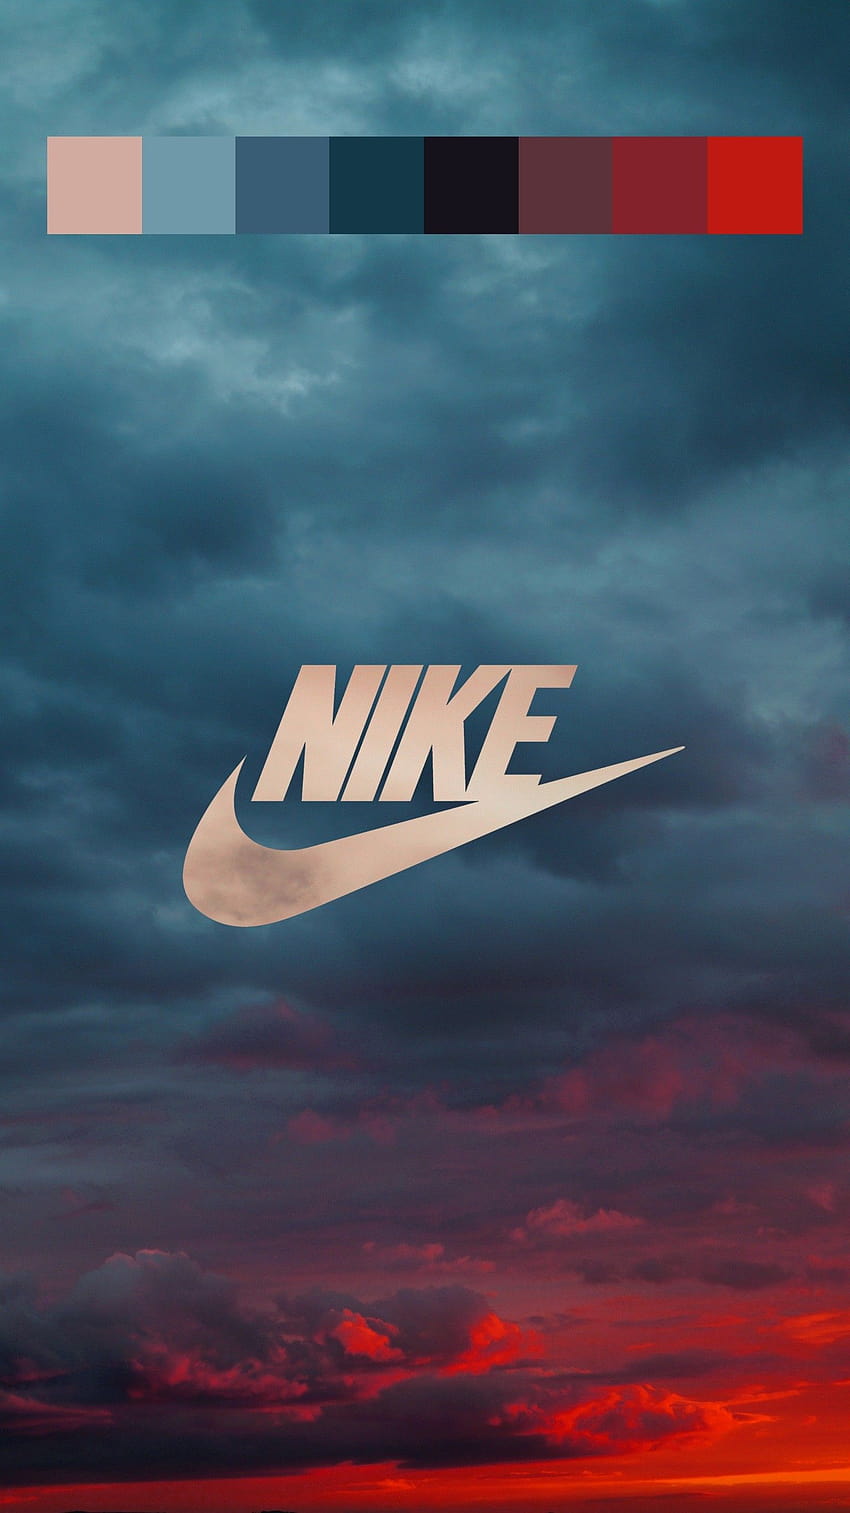 1440x900 Nike vs Adidas Wallpaper,1440x900 Resolution HD 4k